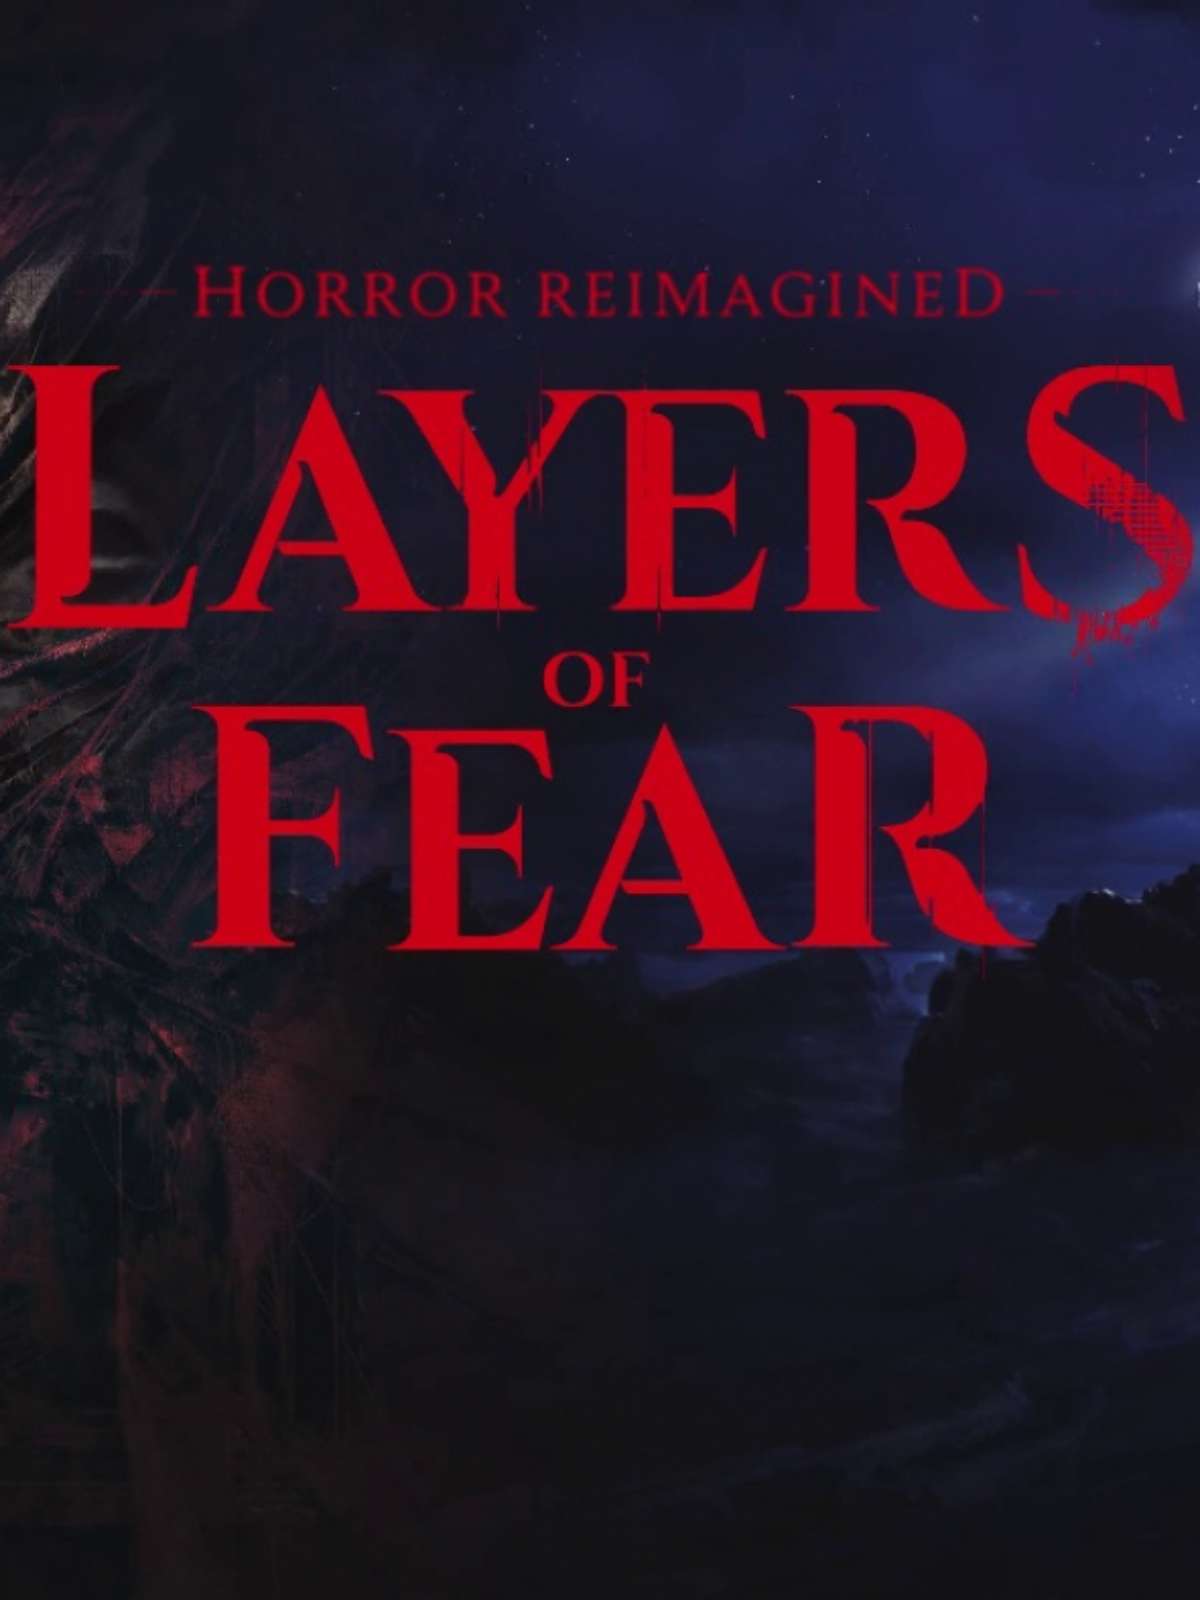 Layers of Fear recebe demo na próxima semana